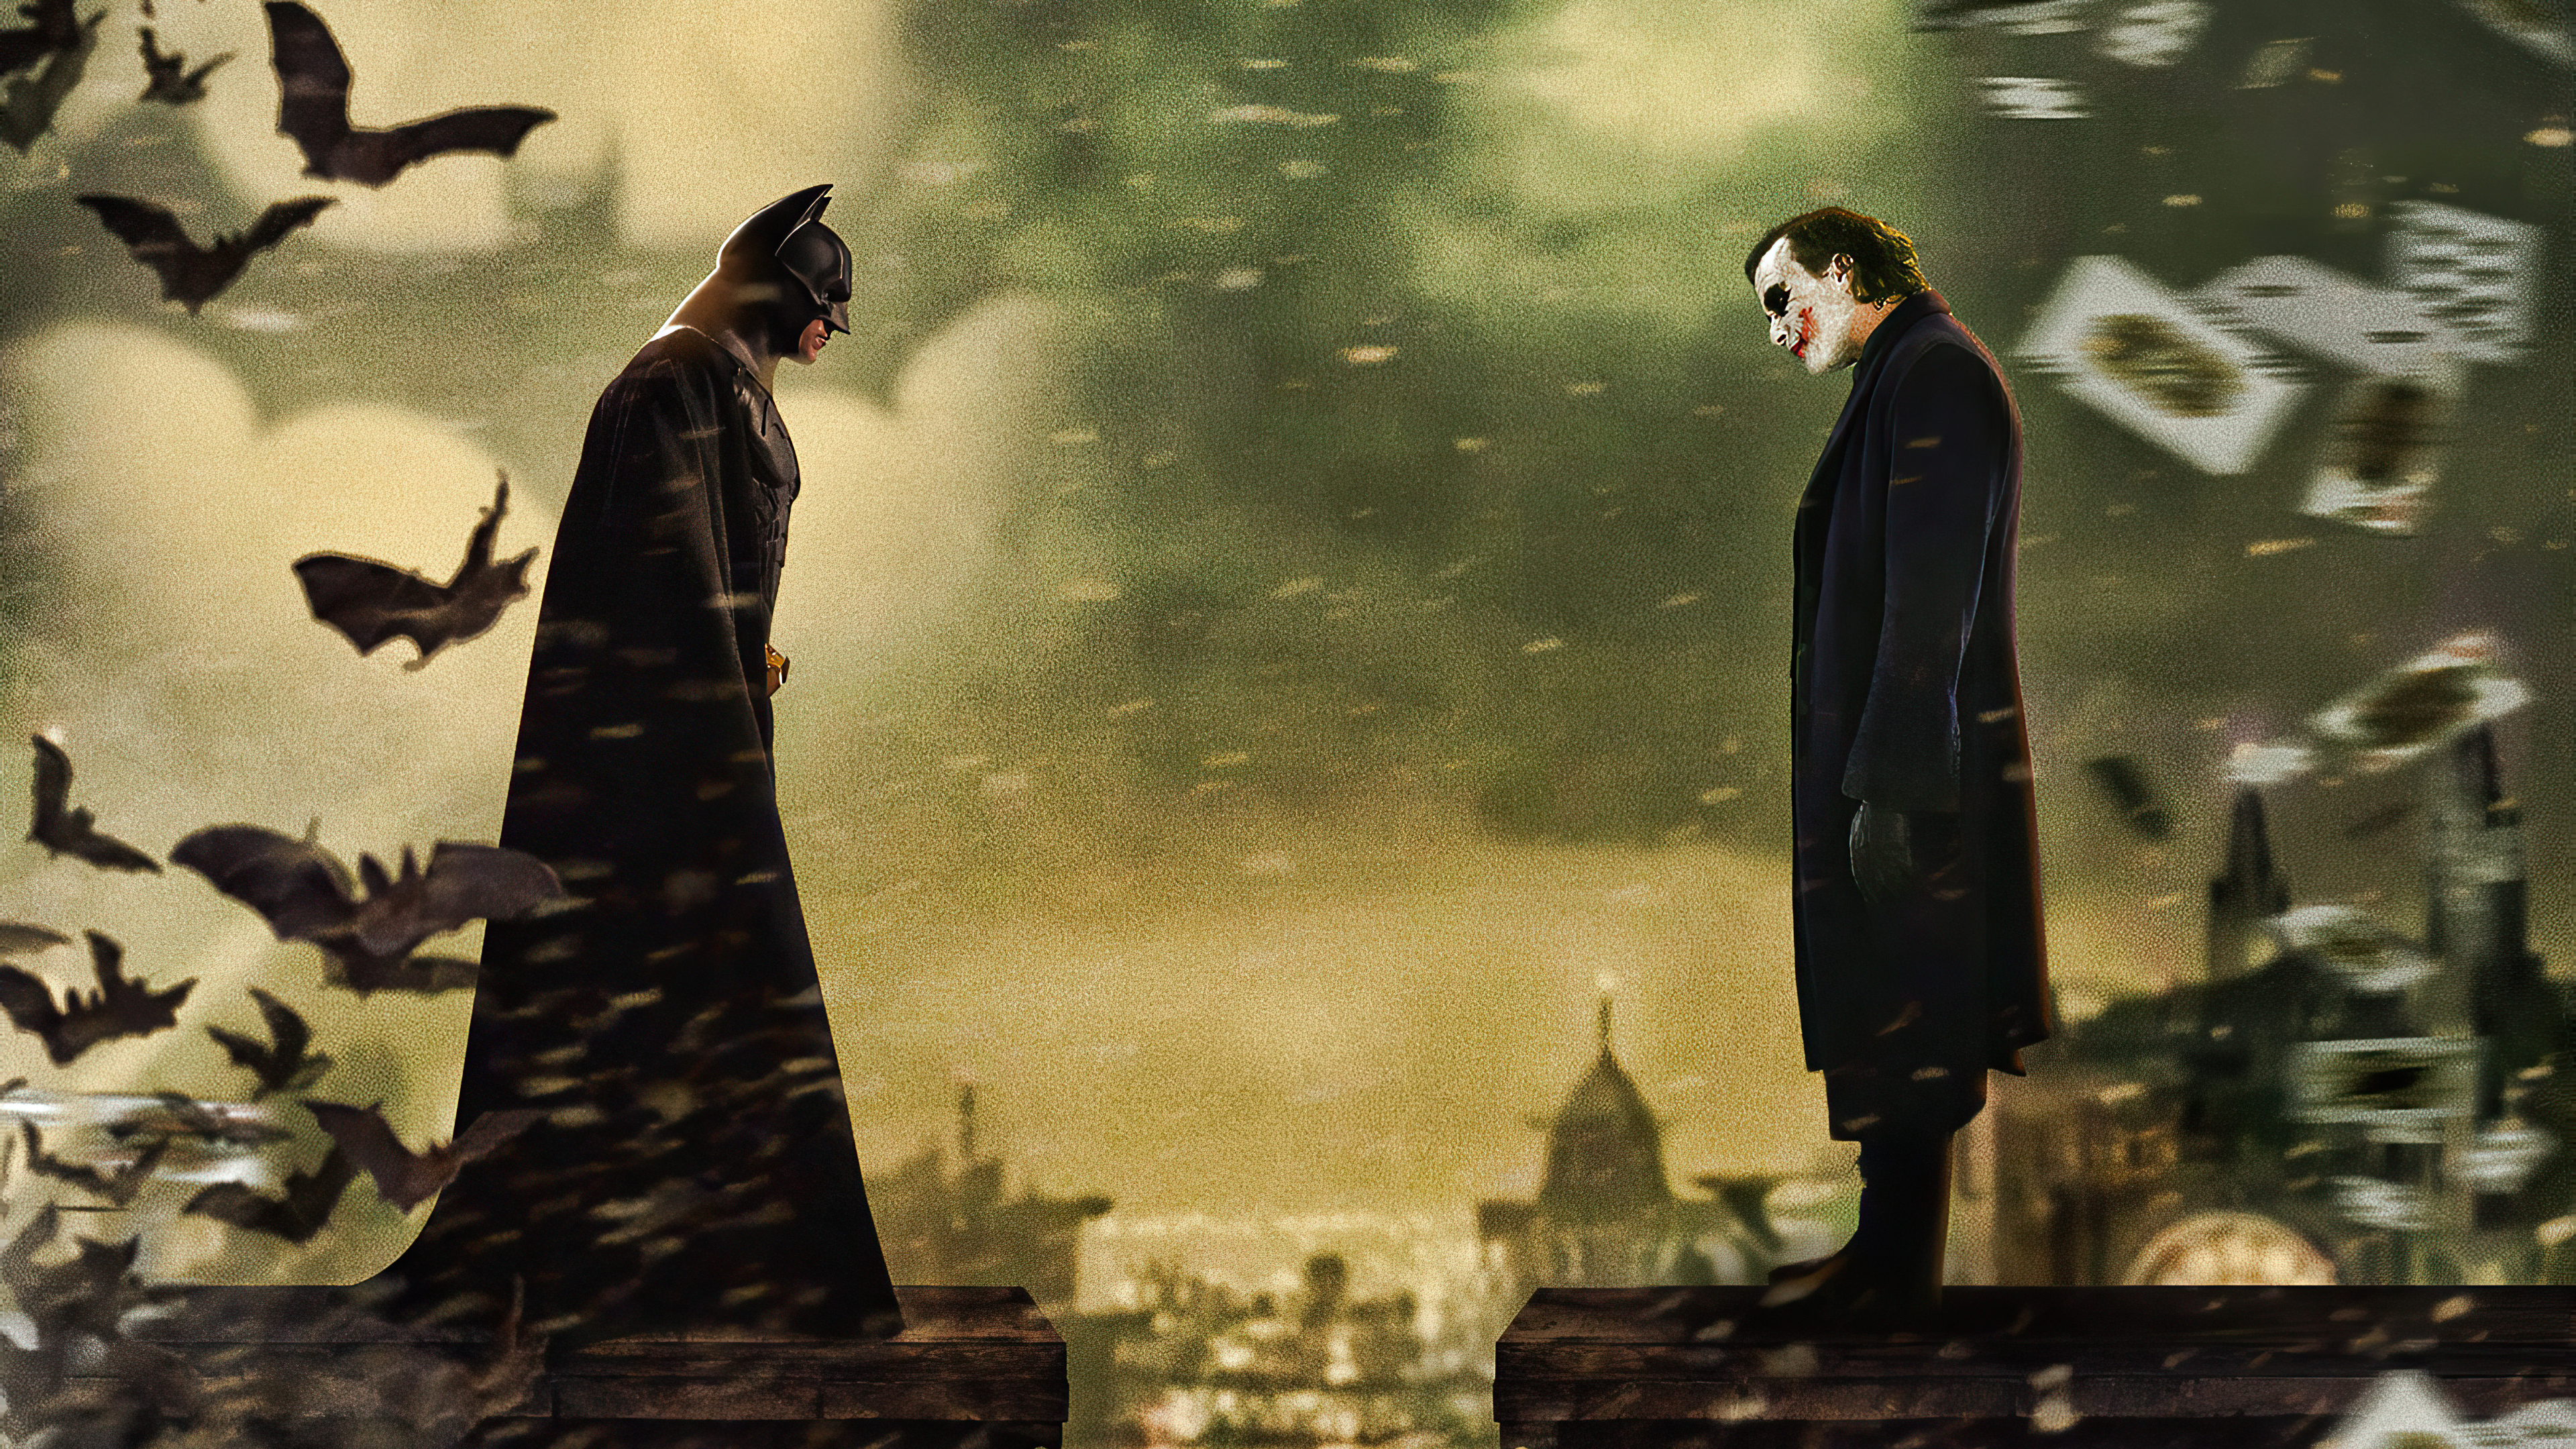 Batman Joker 4k 2020, HD Superheroes, 4k Wallpapers, Images, Backgrounds,  Photos and Pictures